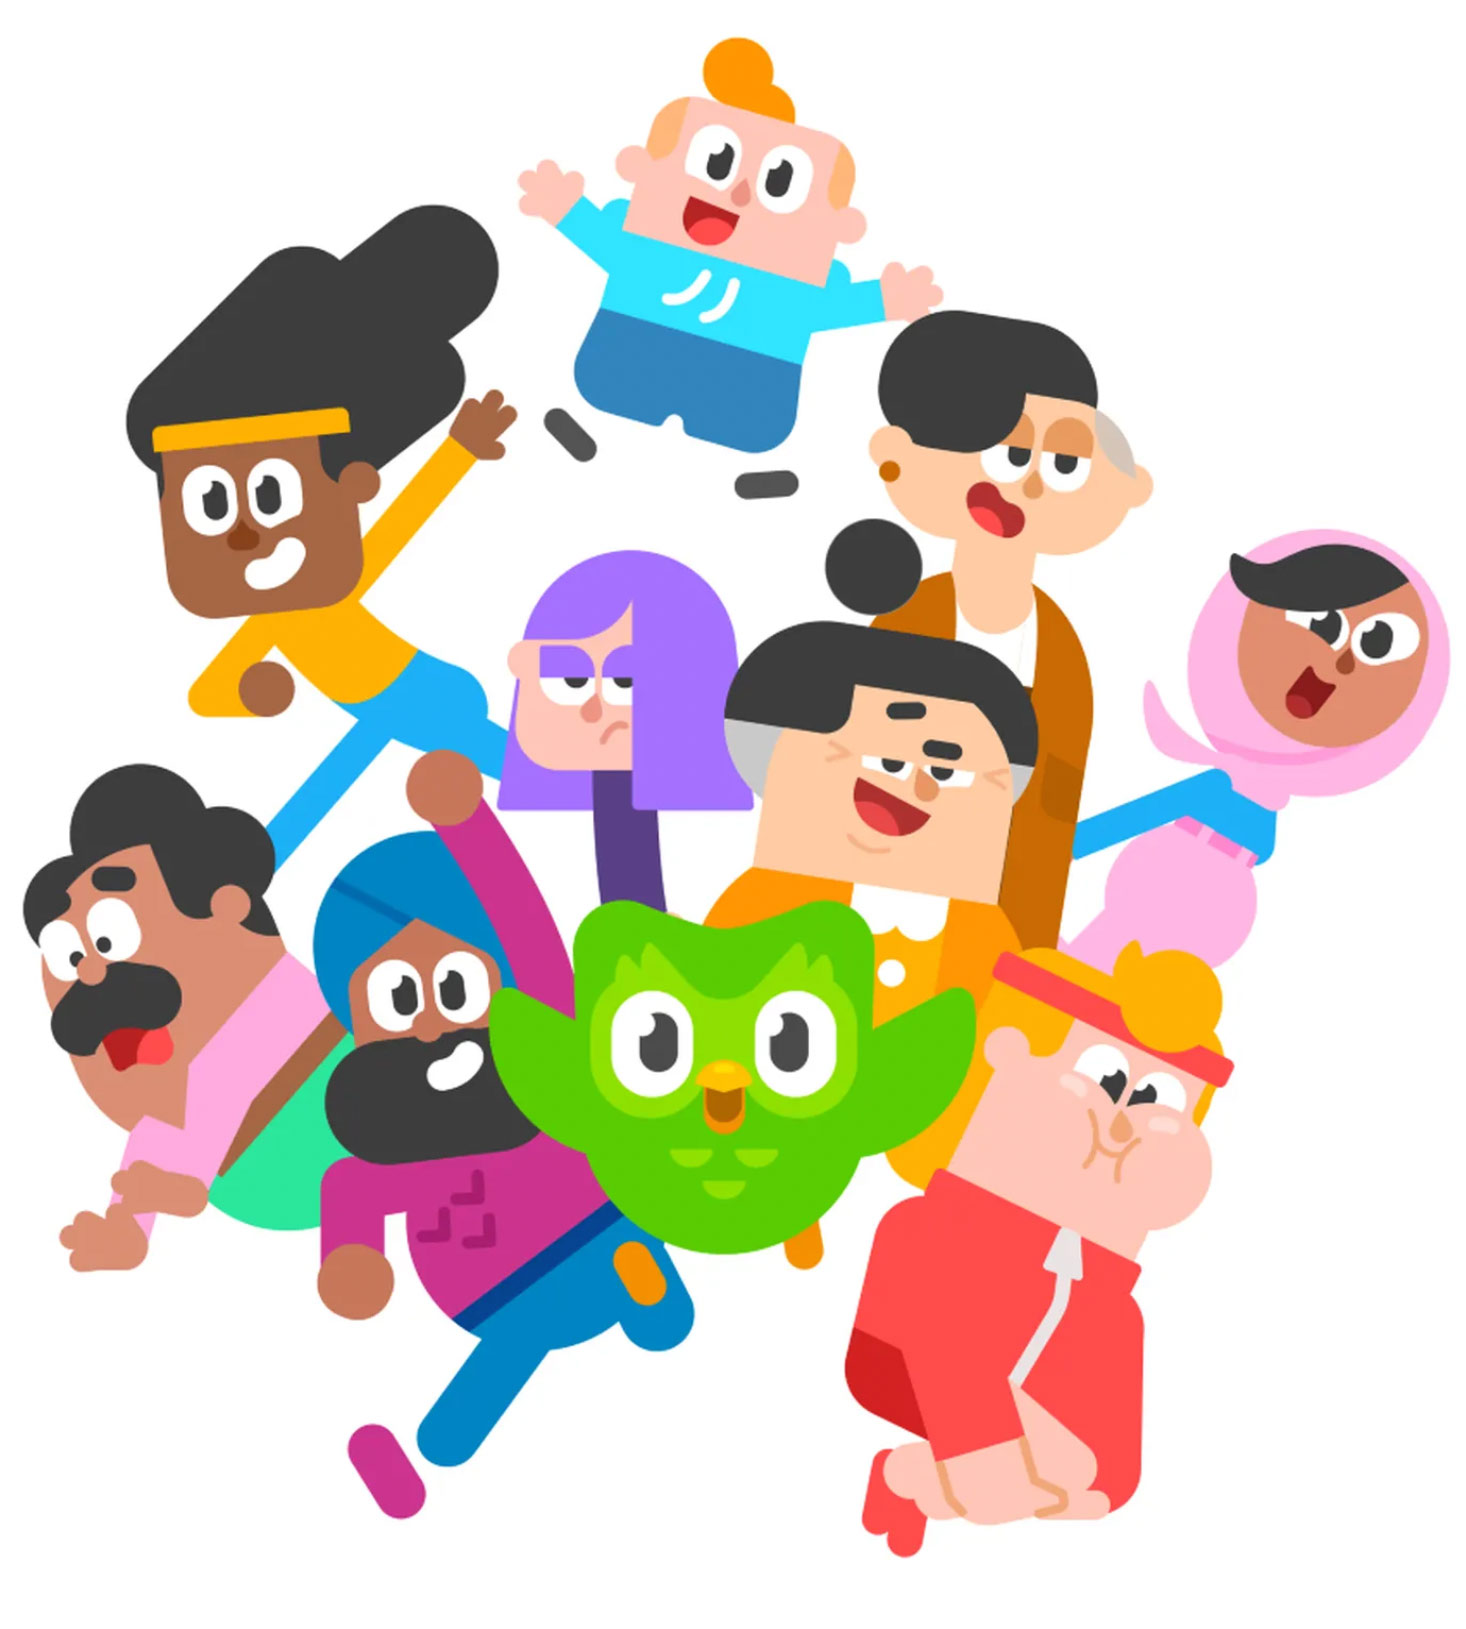 Duolingo's cast of characters